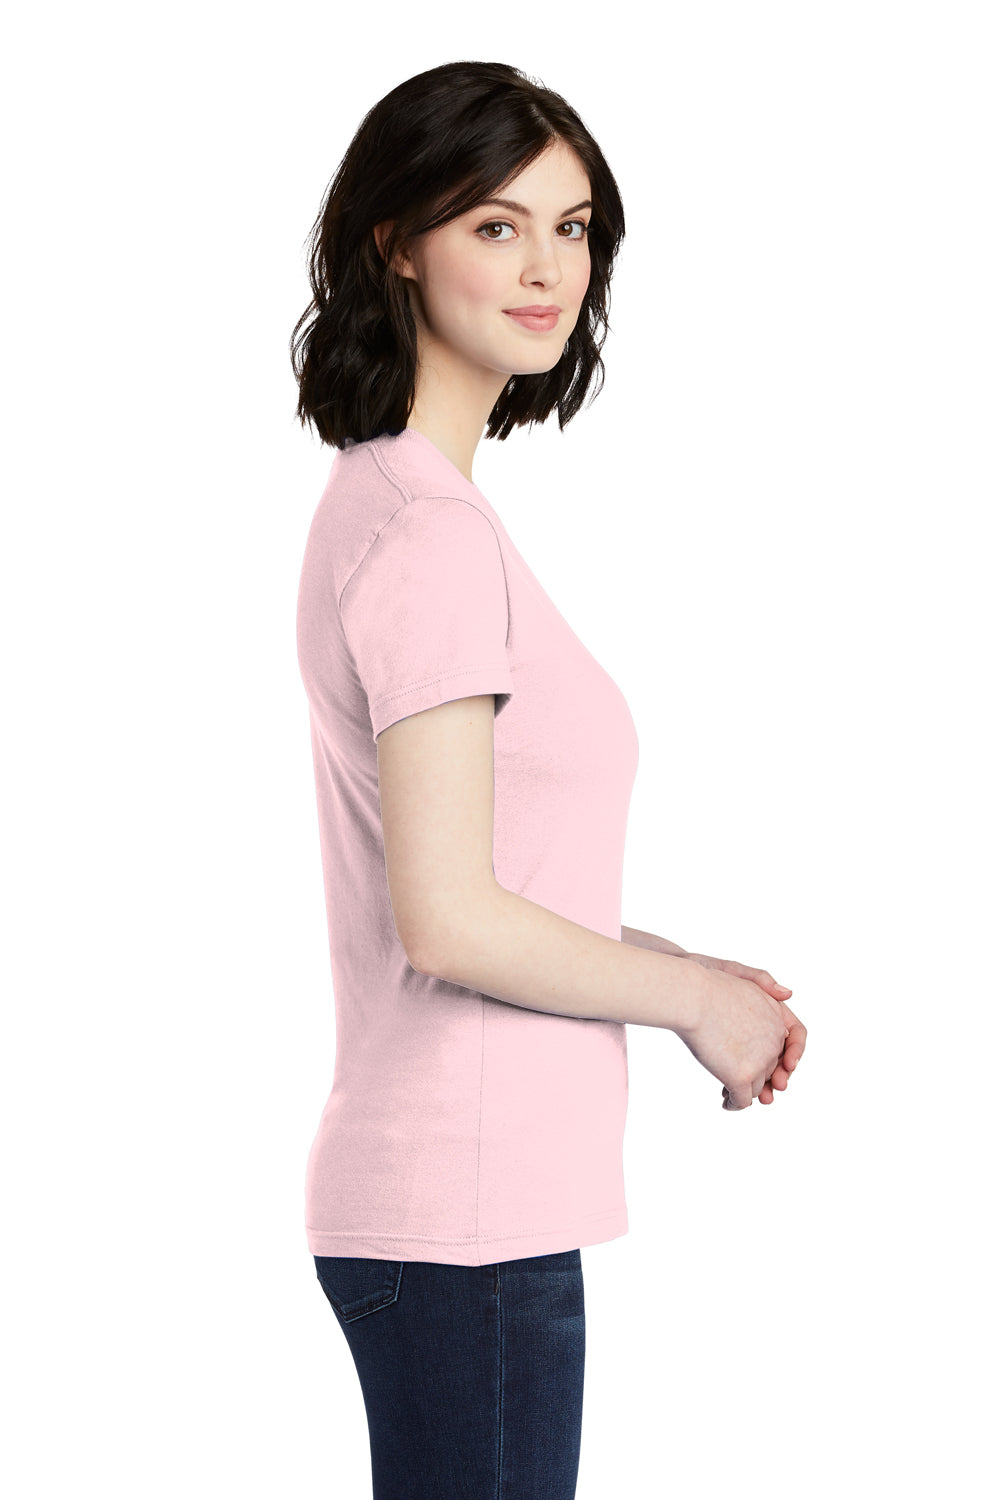 American Apparel 2102W Womens Fine Jersey Short Sleeve Crewneck T-Shirt Light Pink Side